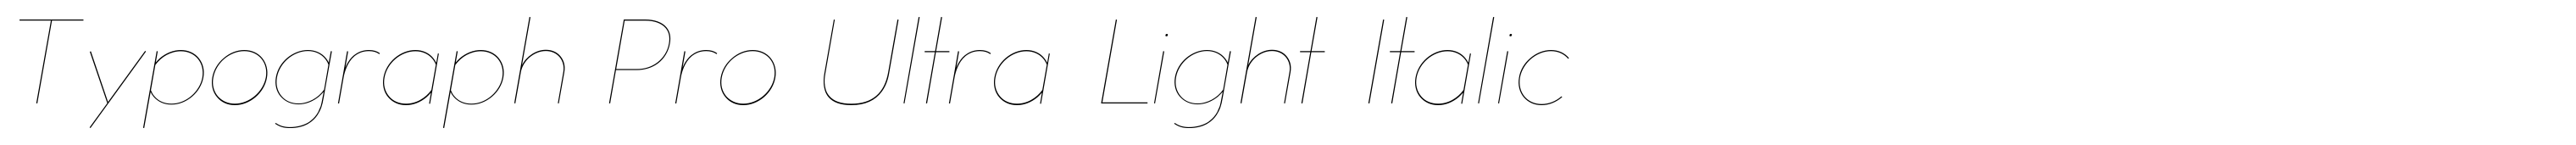 Typograph Pro Ultra Light Italic